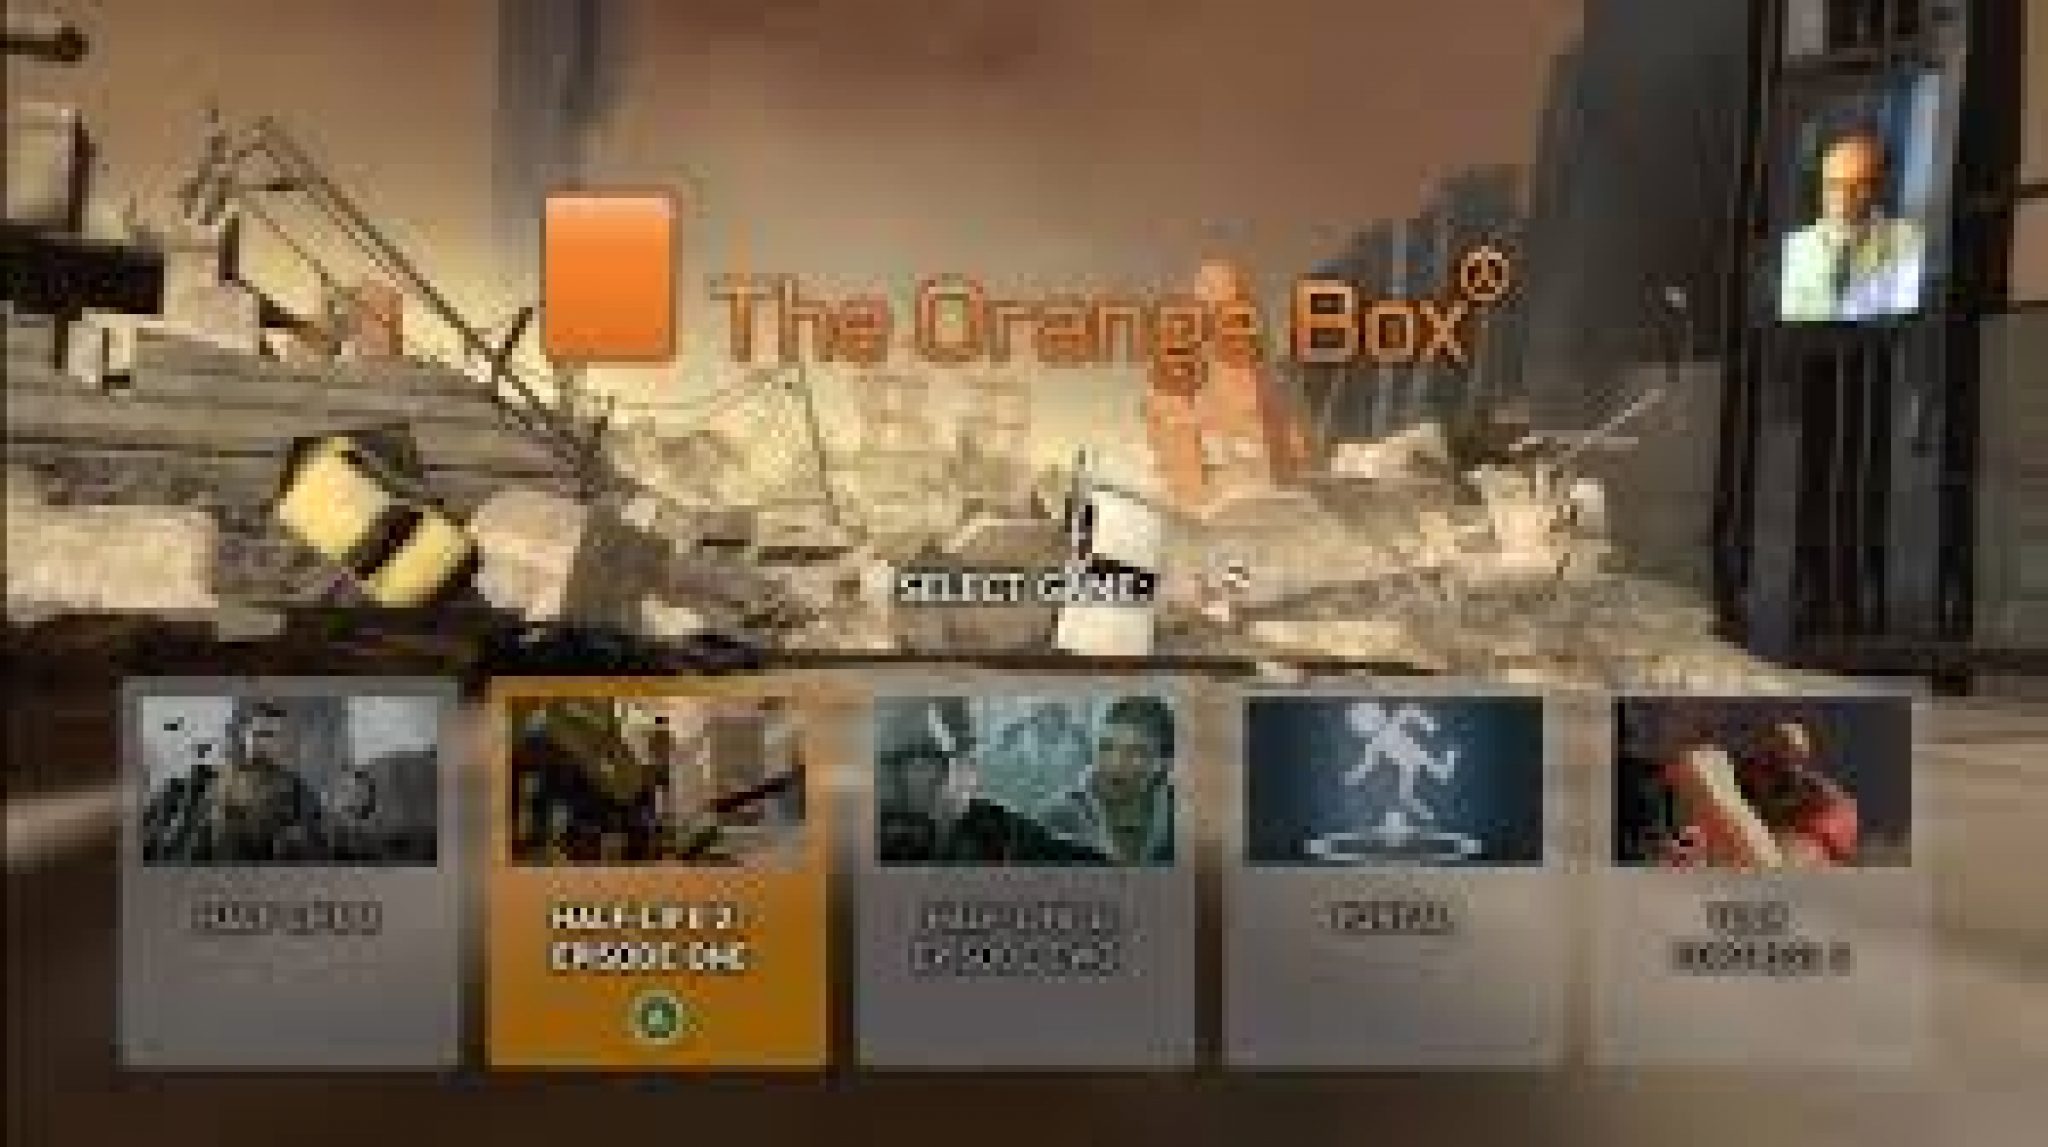 the orange box free download